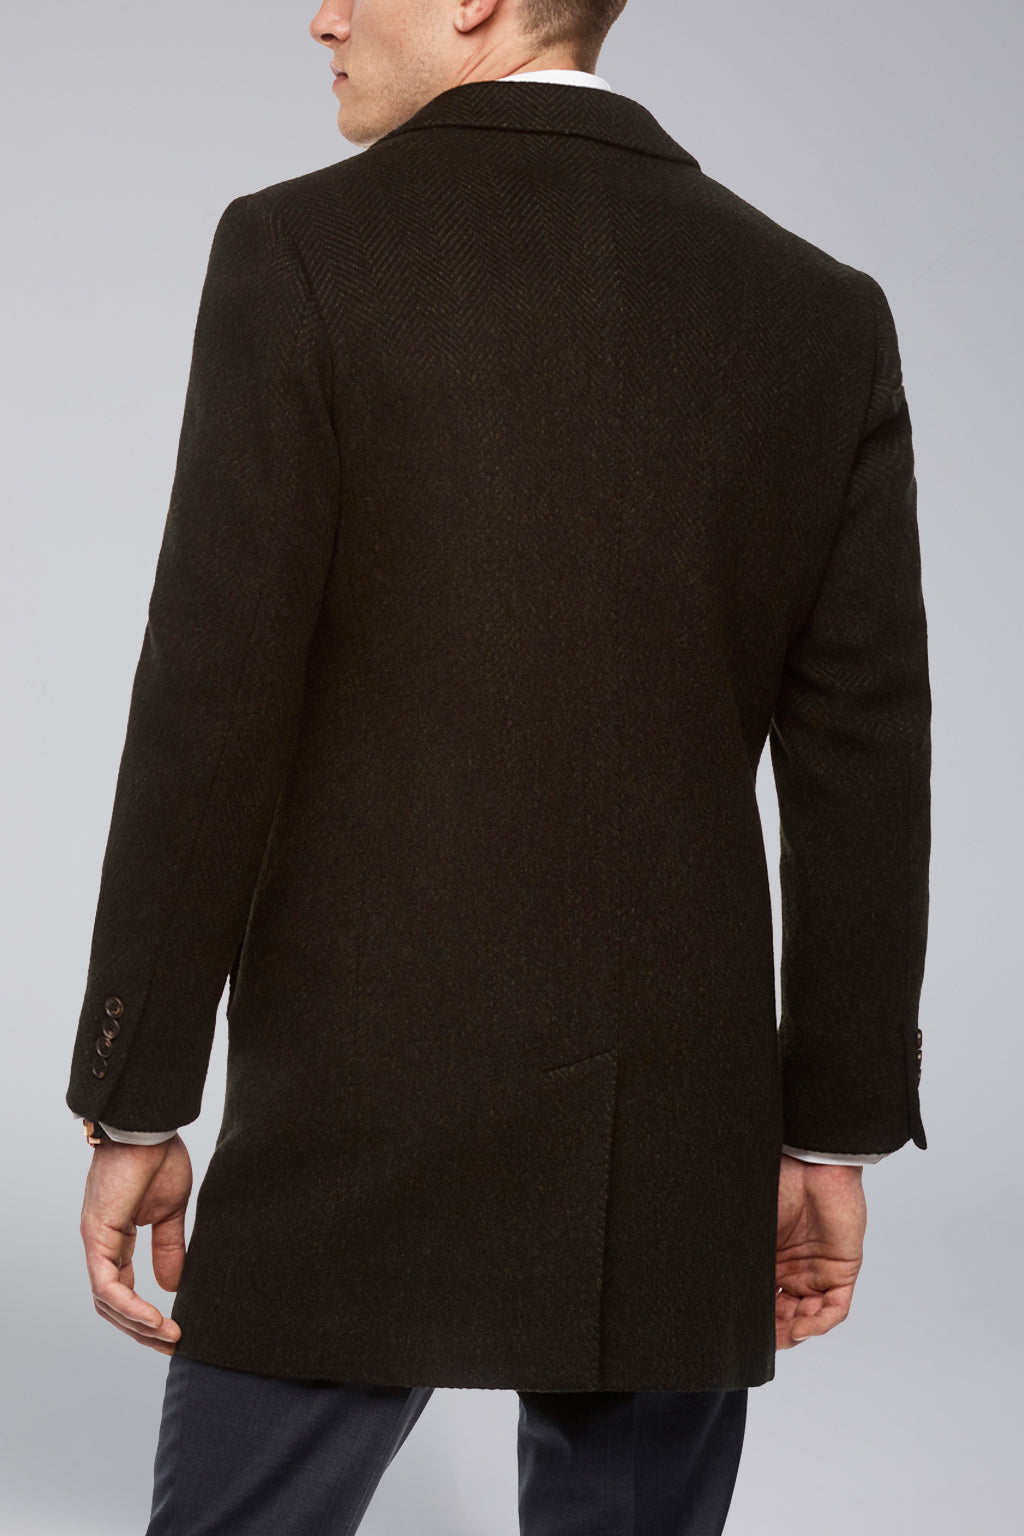 Stone Slim Fit Wool Overcoat - Navy-Olive Herringbone